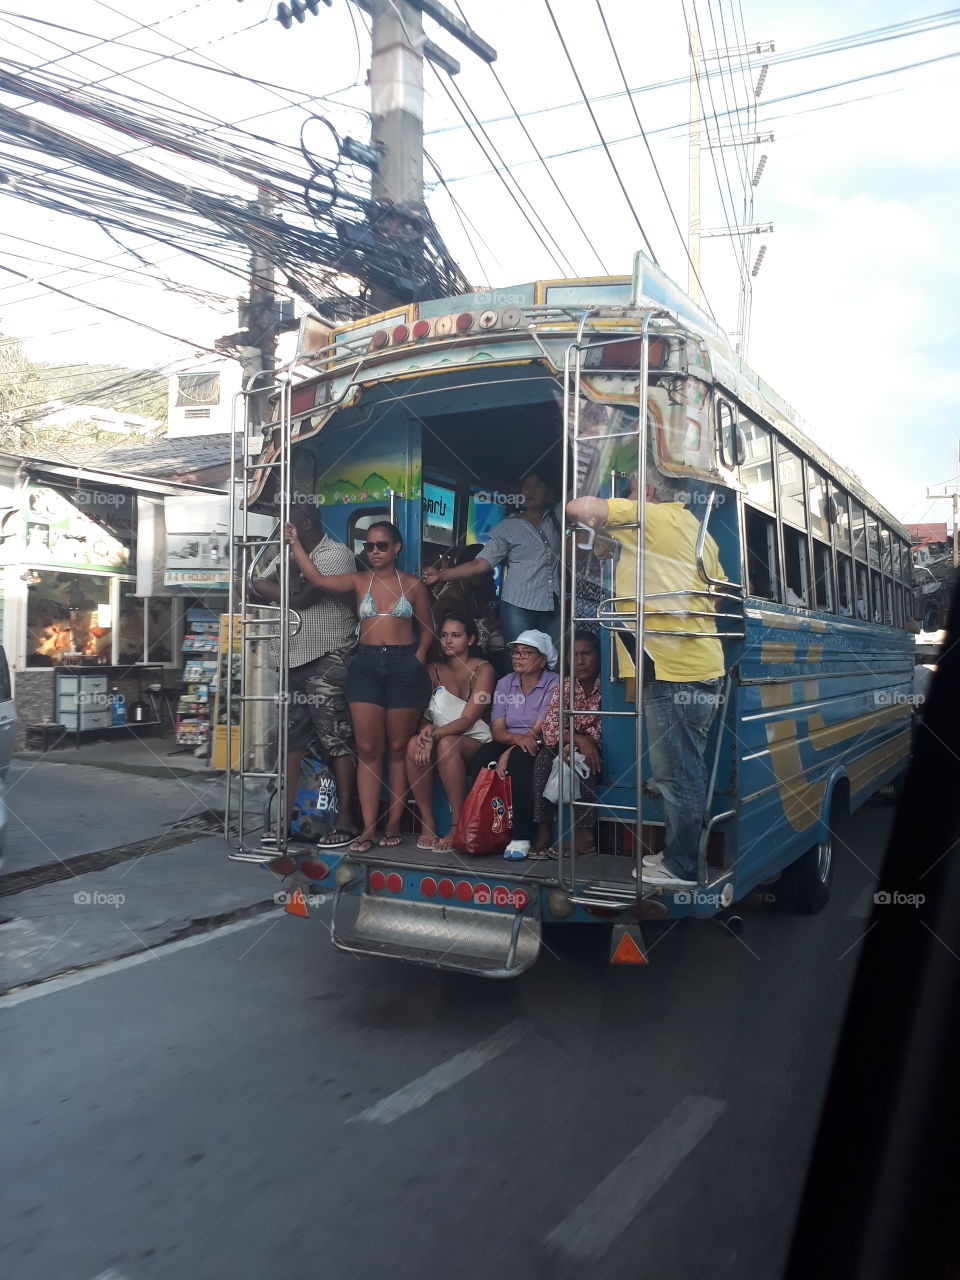 When tourist prefer public transportation